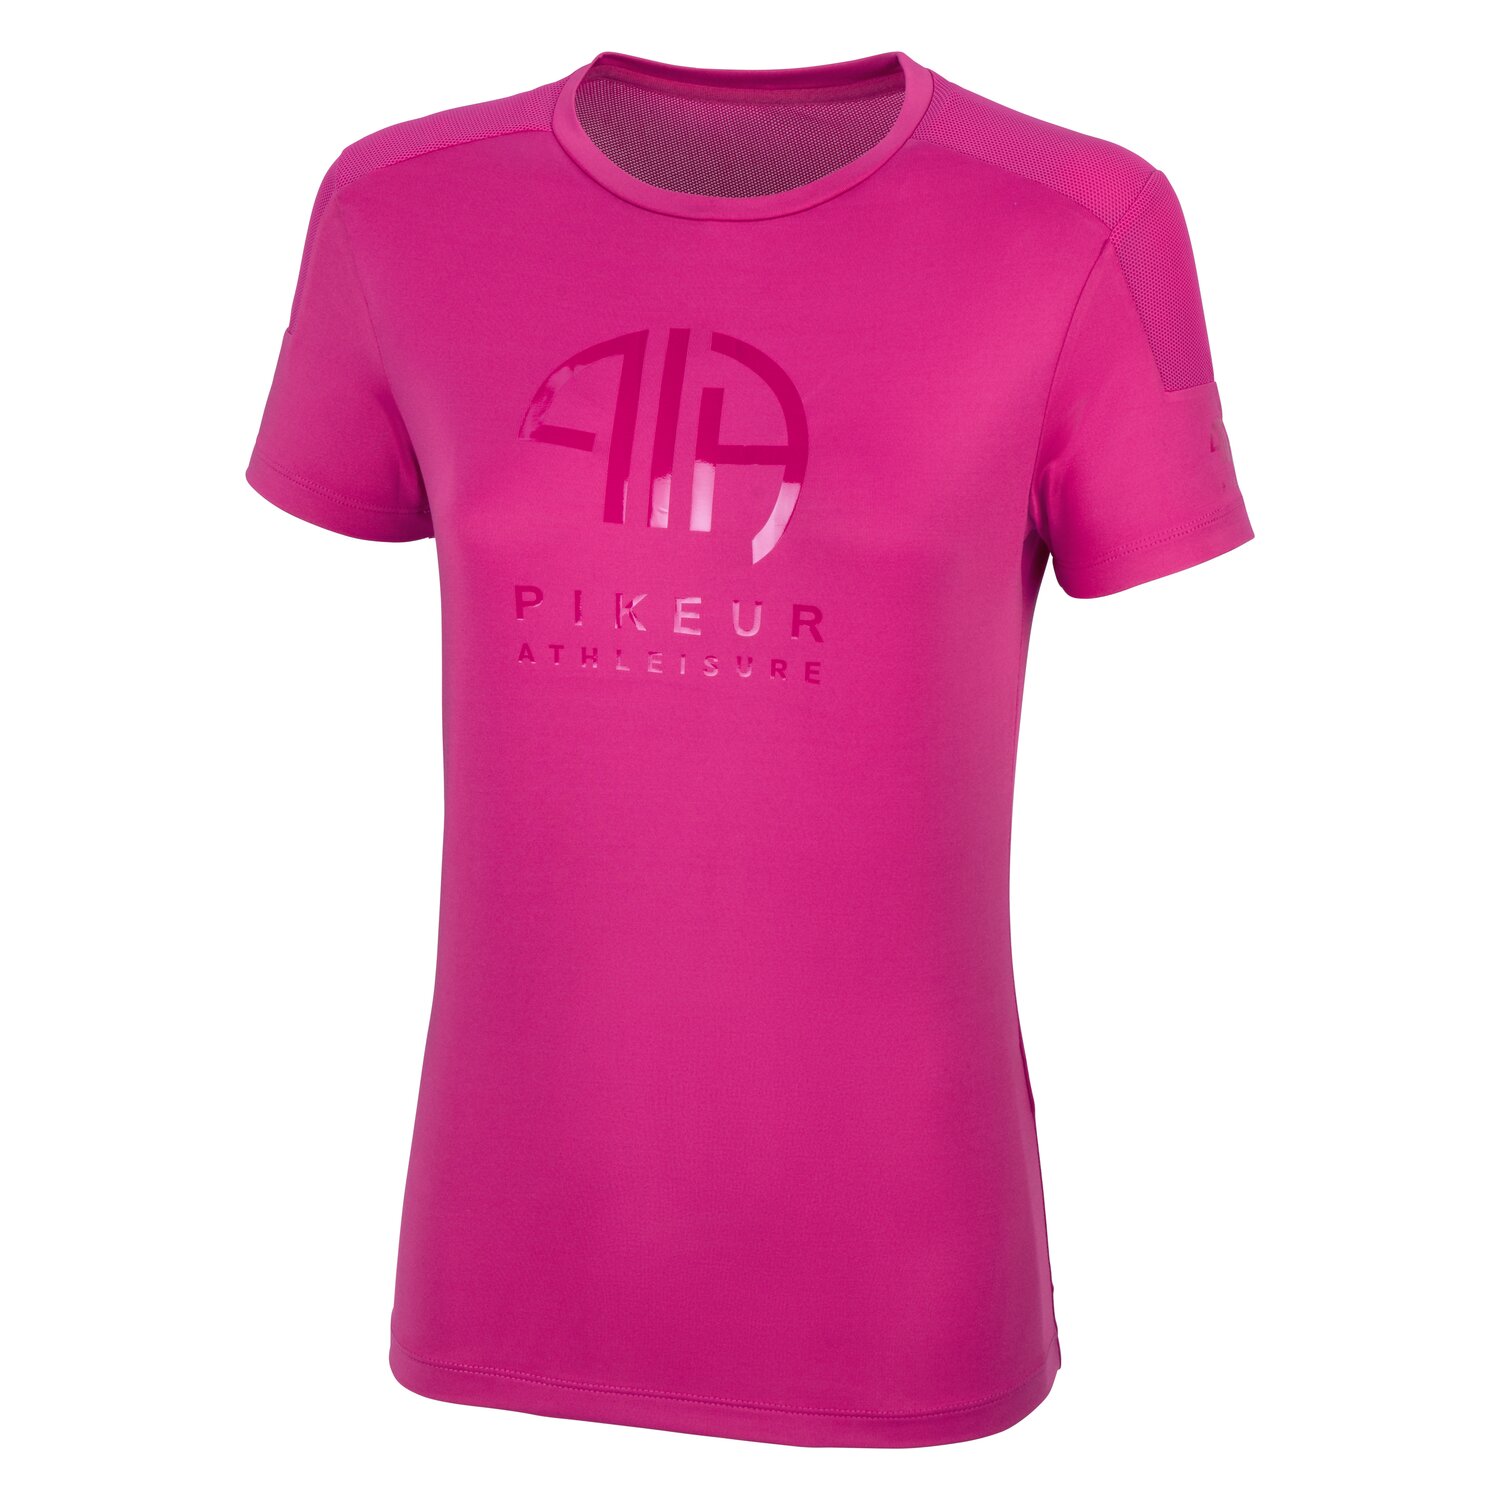 PIKEUR Hybrid-Shirt Trixi Athleisure hot-pink | 40